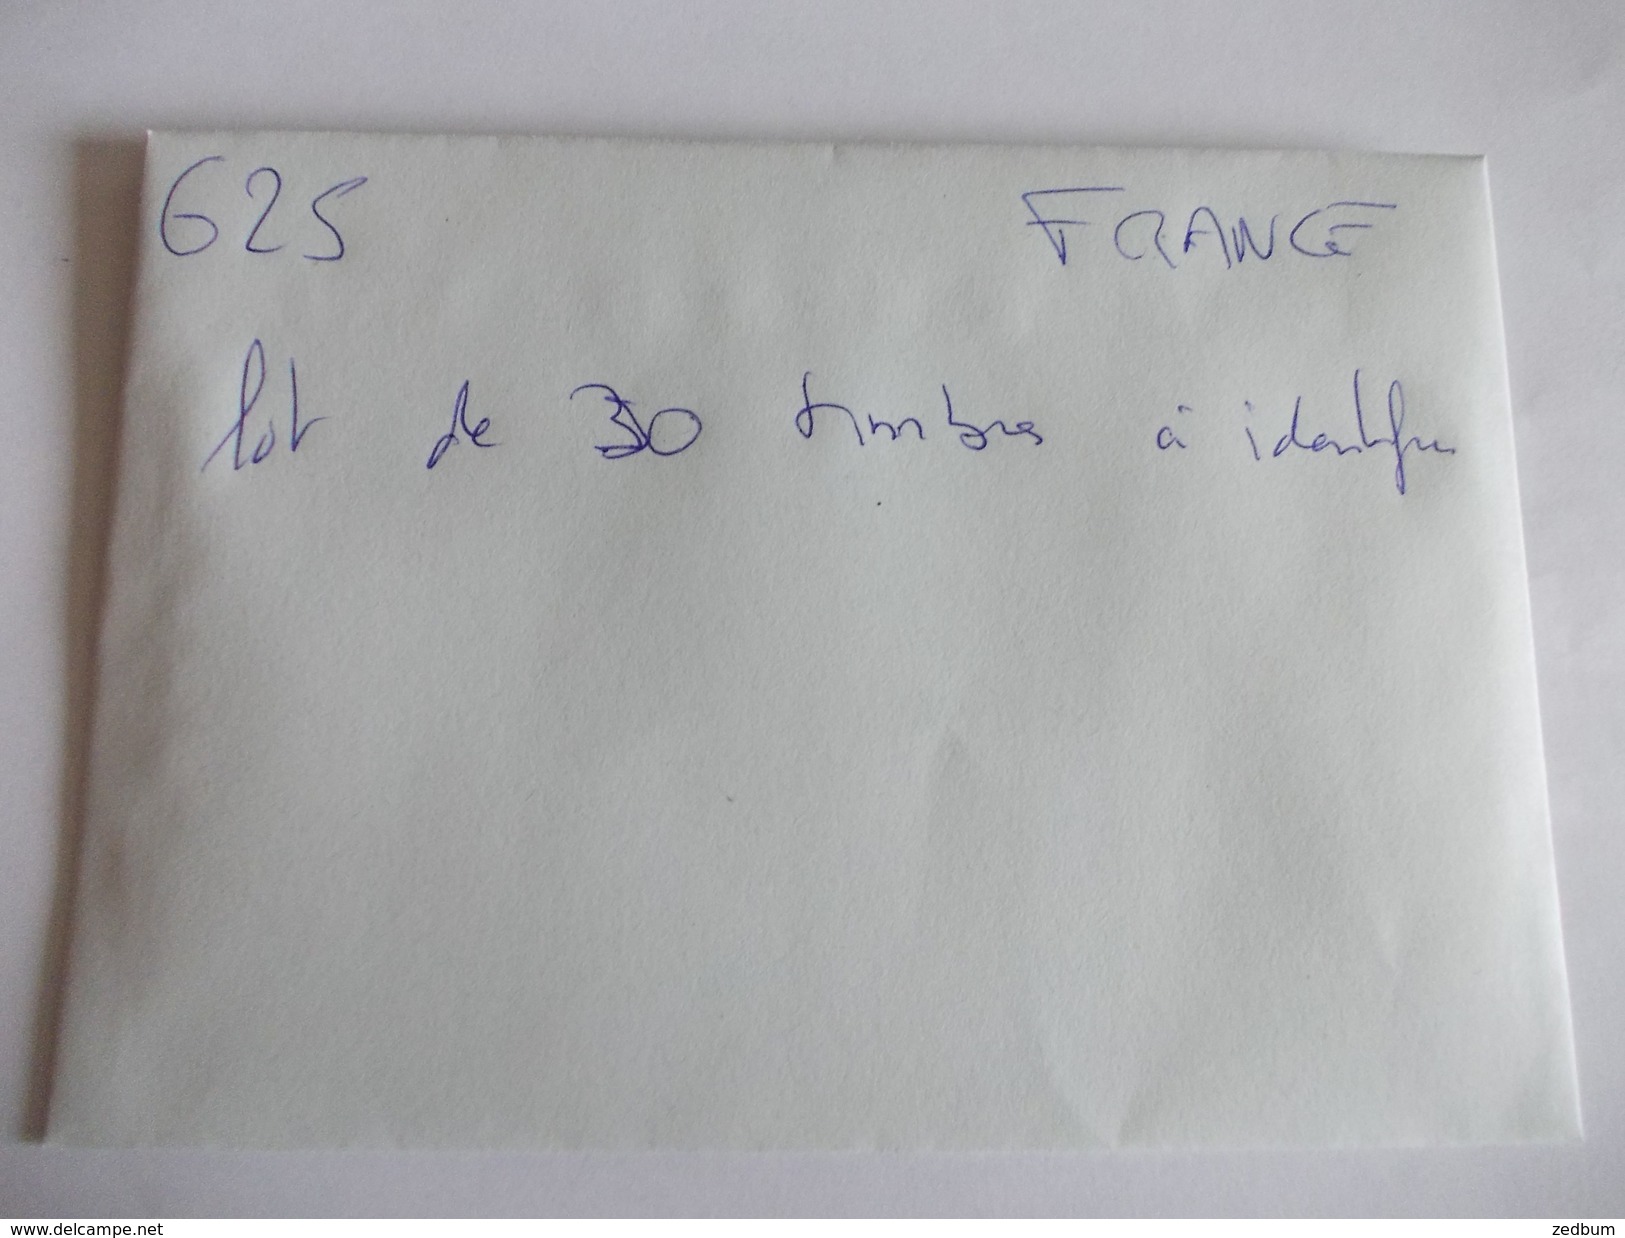 TIMBRE France Lot De 30 Timbres à Identifier N° 625 - Lots & Kiloware (mixtures) - Max. 999 Stamps